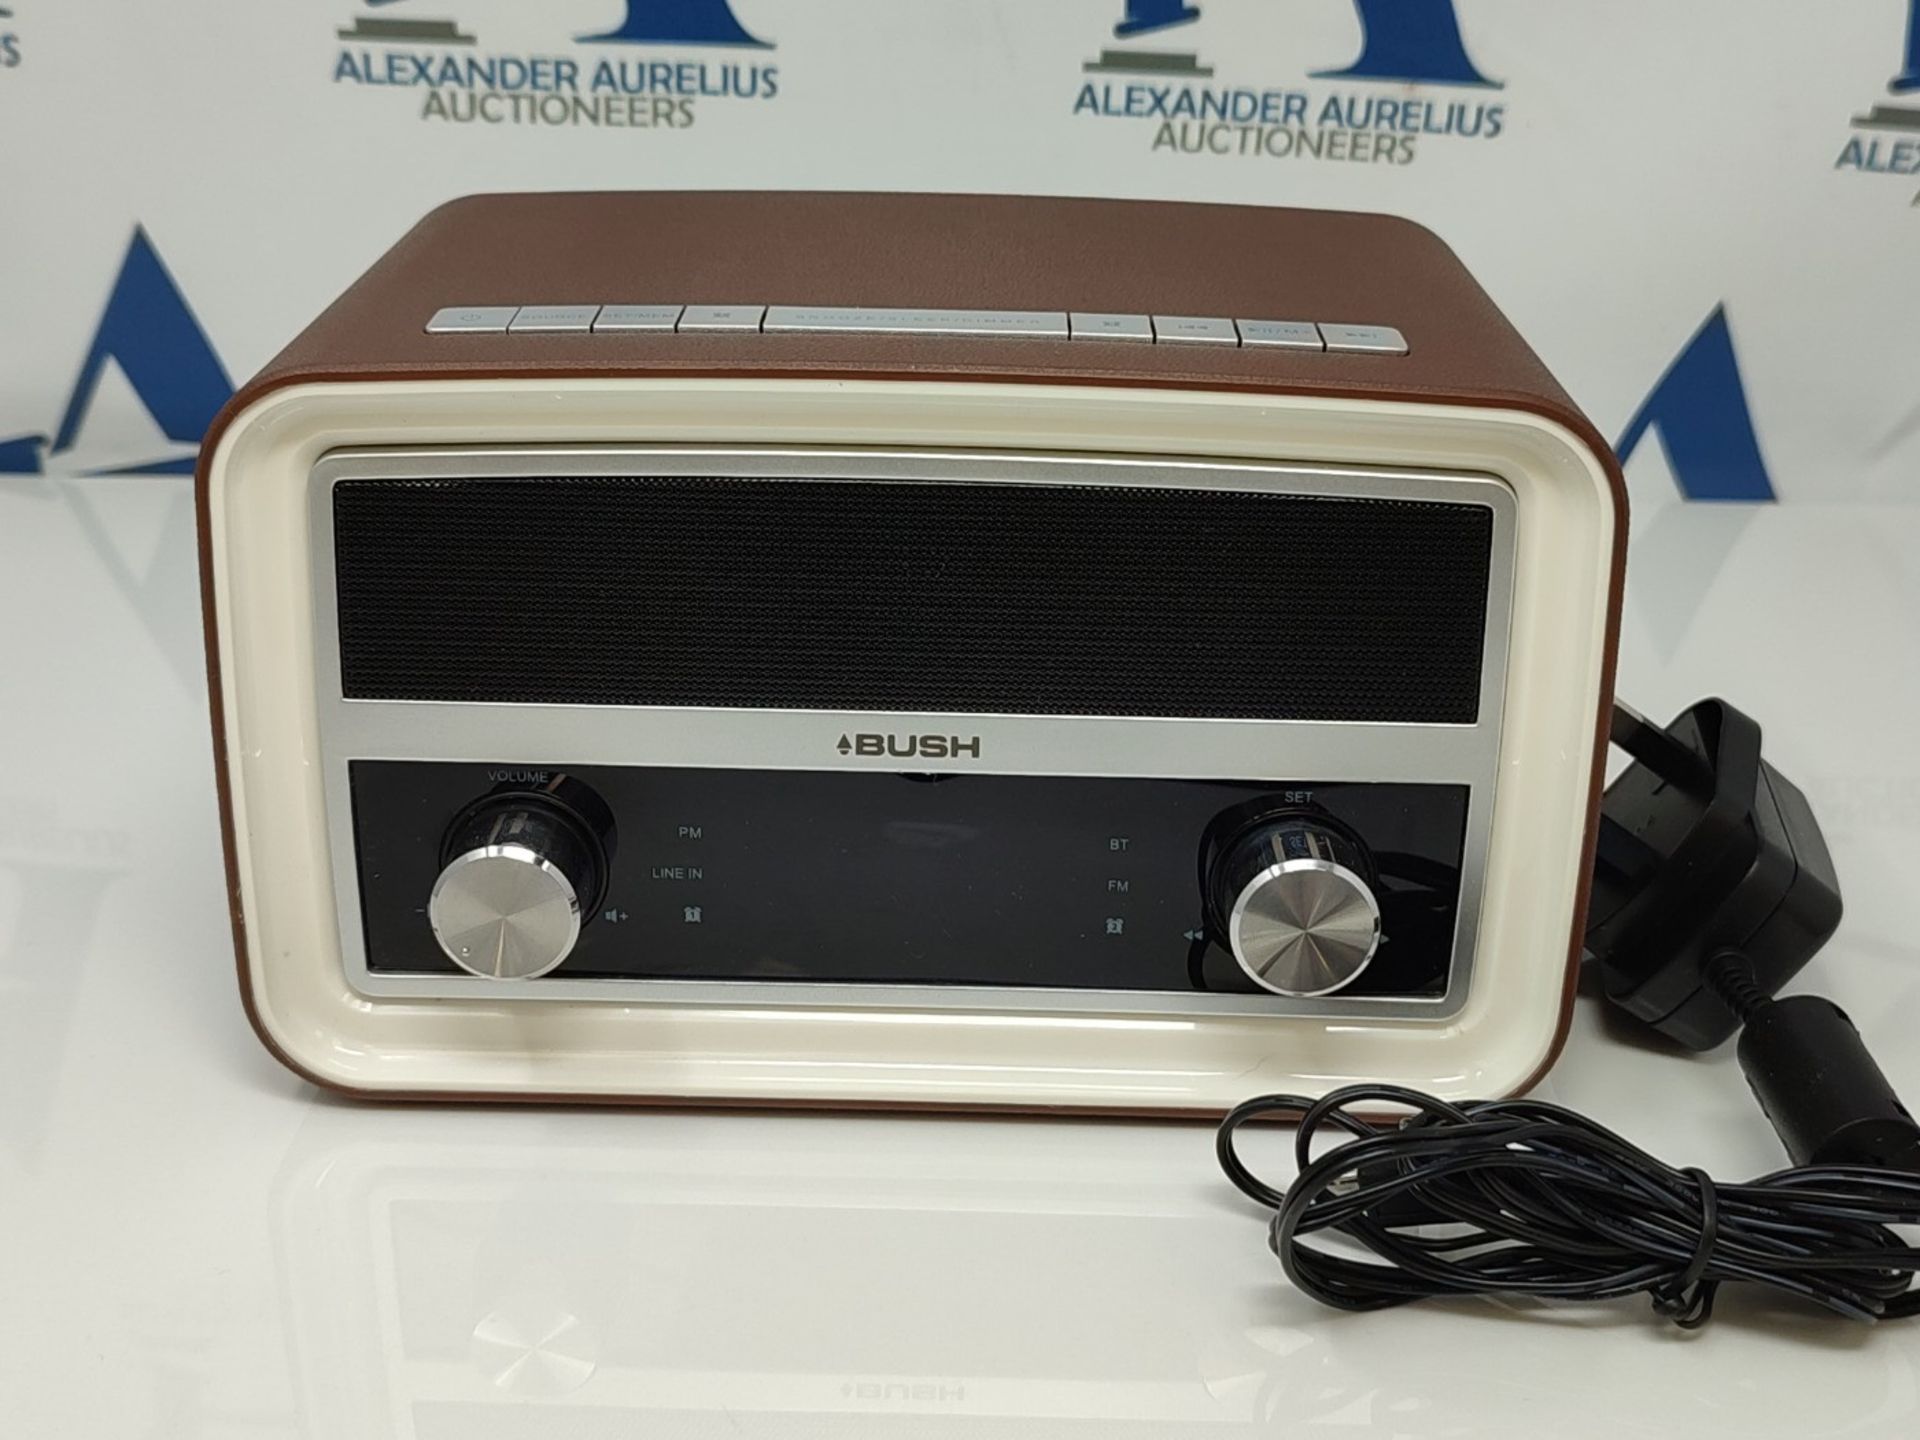 Bush model no. BT-201 FM classic radio with bluetooth - Image 2 of 2